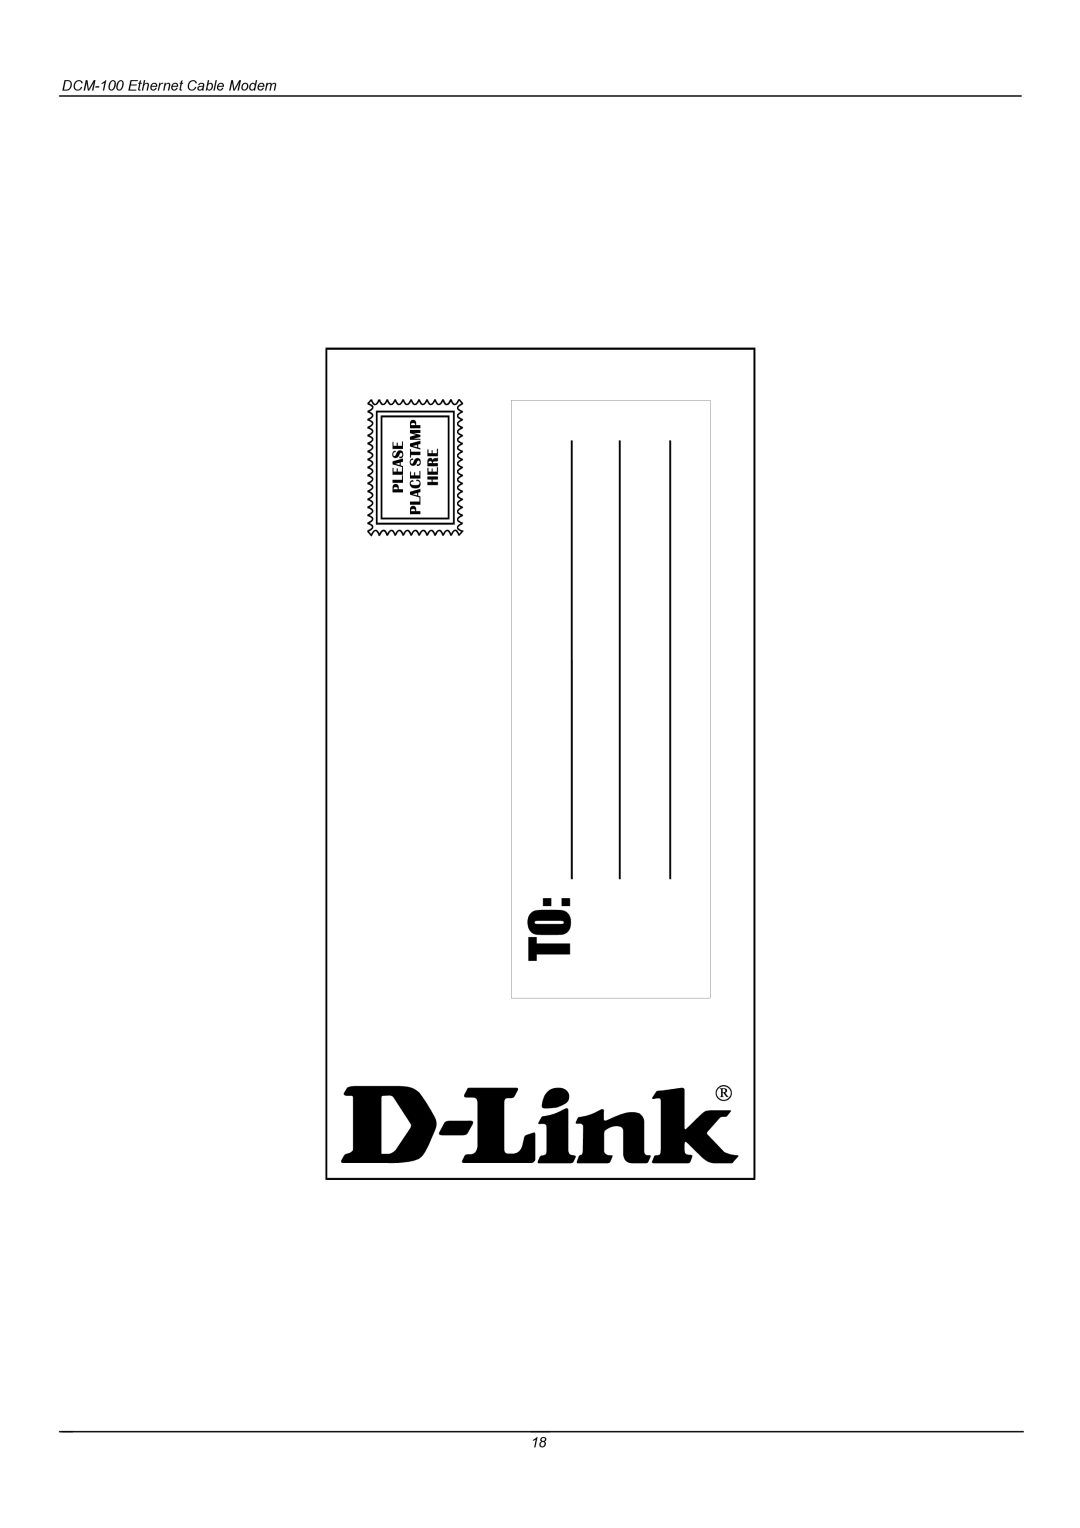 D-Link user manual DCM-100 Ethernet Cable Modem 